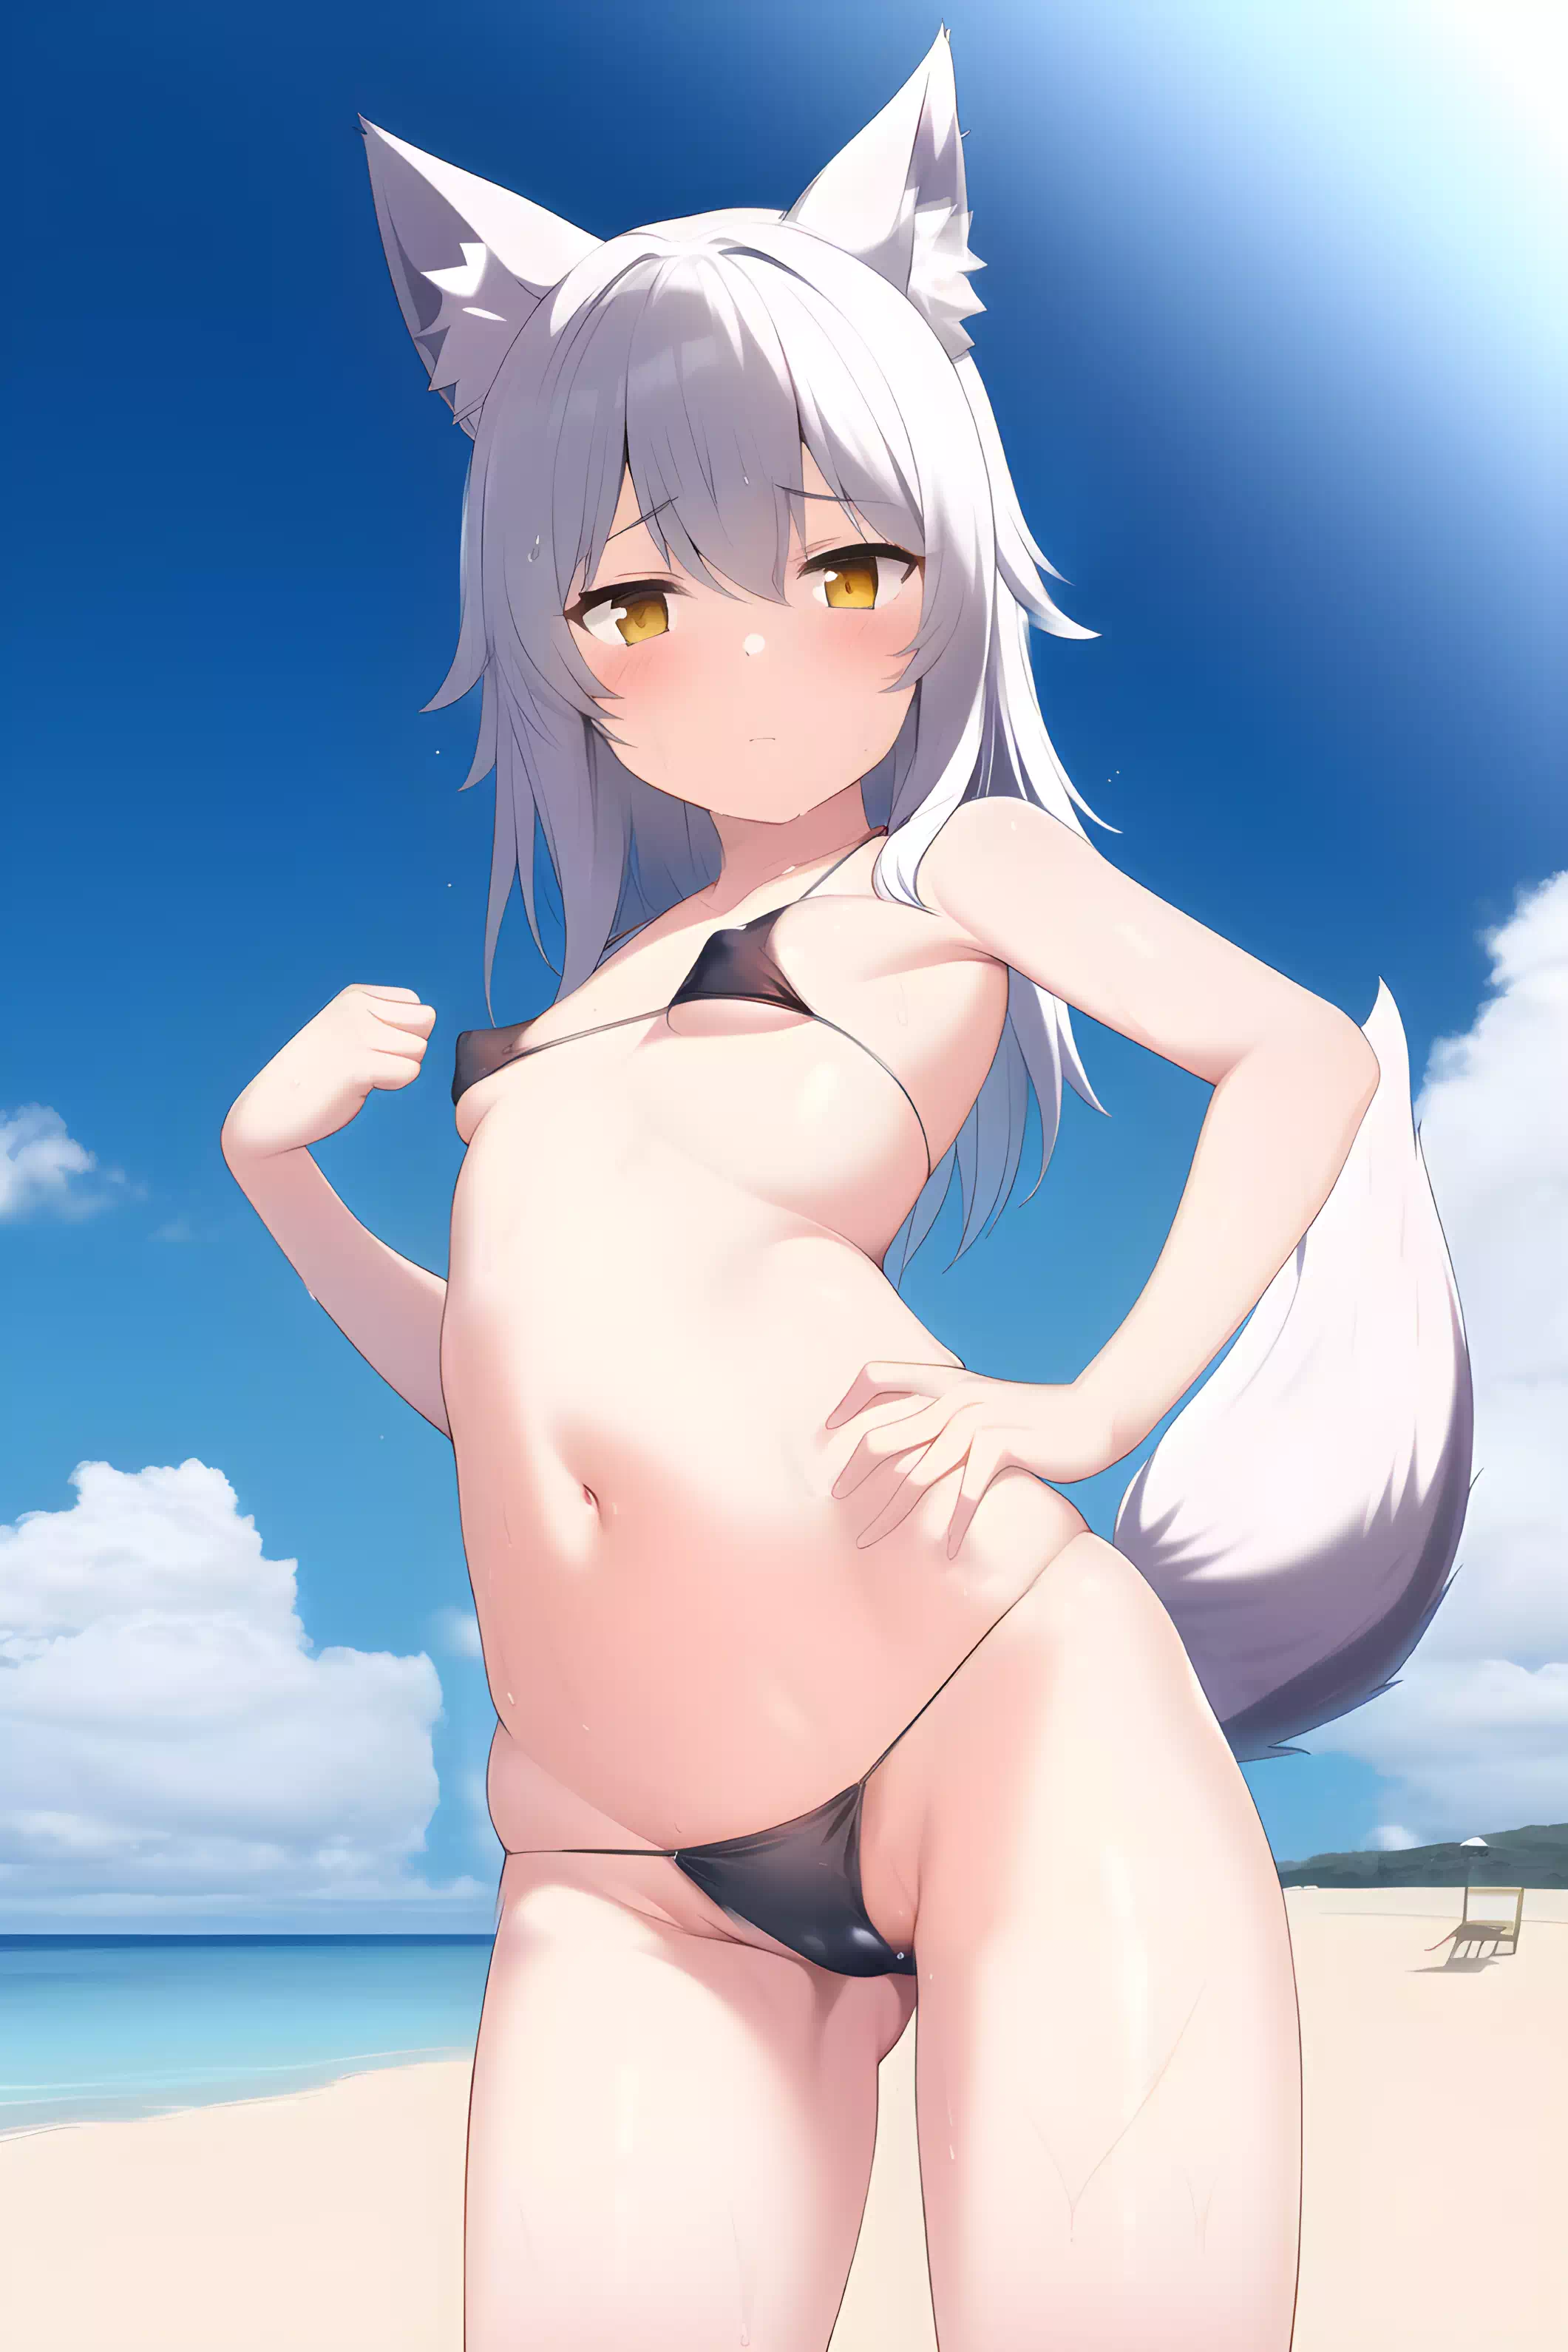 Good wolf at the beach.